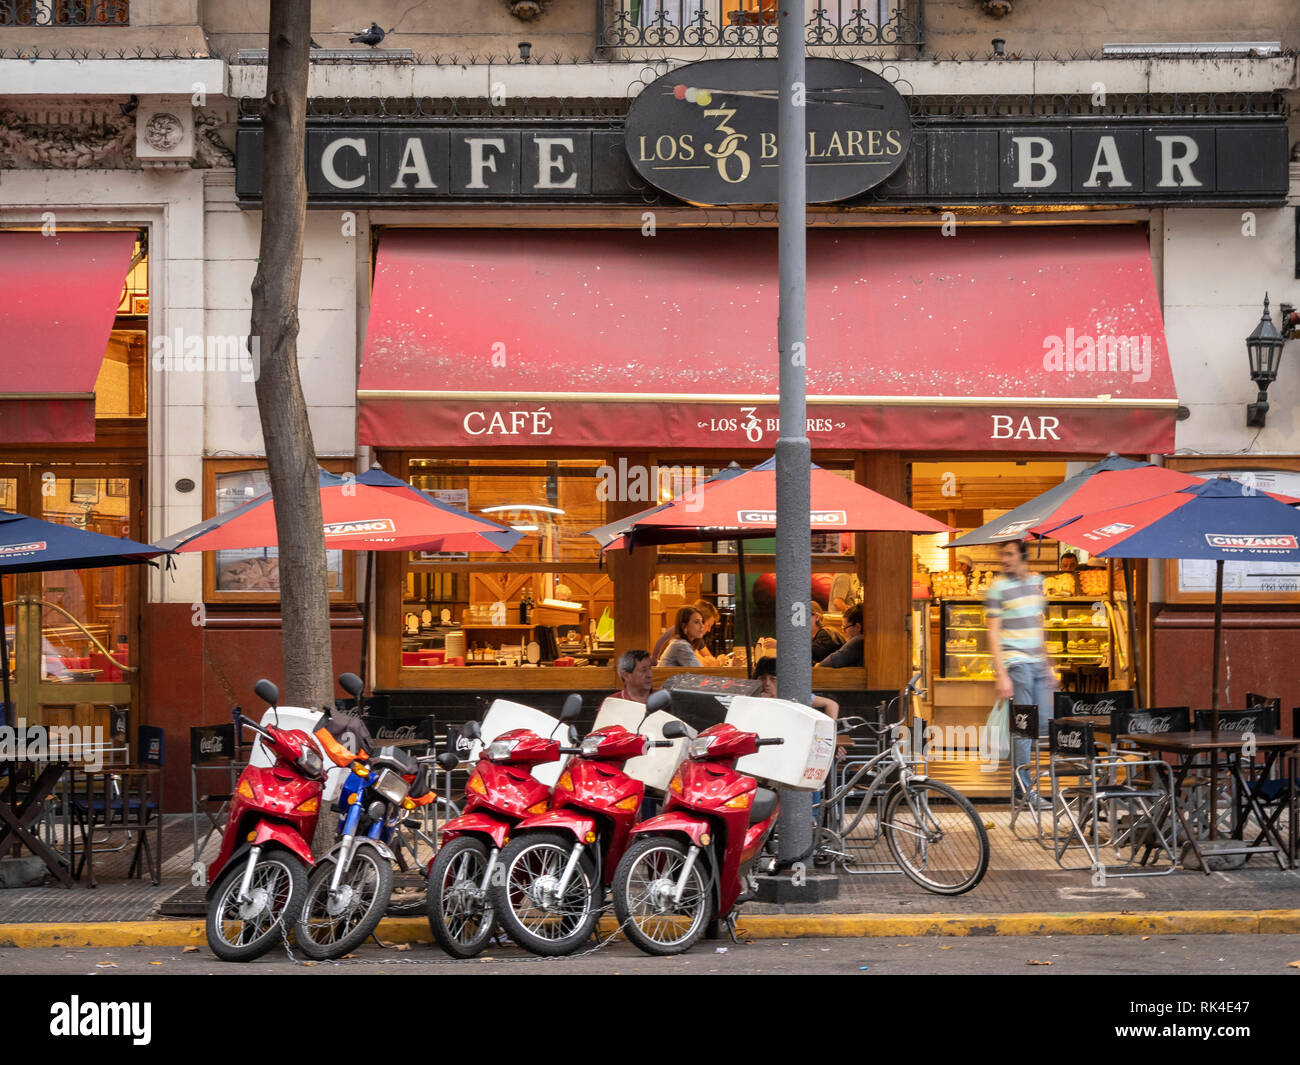 Cafe 36 Billares on Avenida de Mayo in the historic city center of Buenos Aires, Argentina. Stock Photo